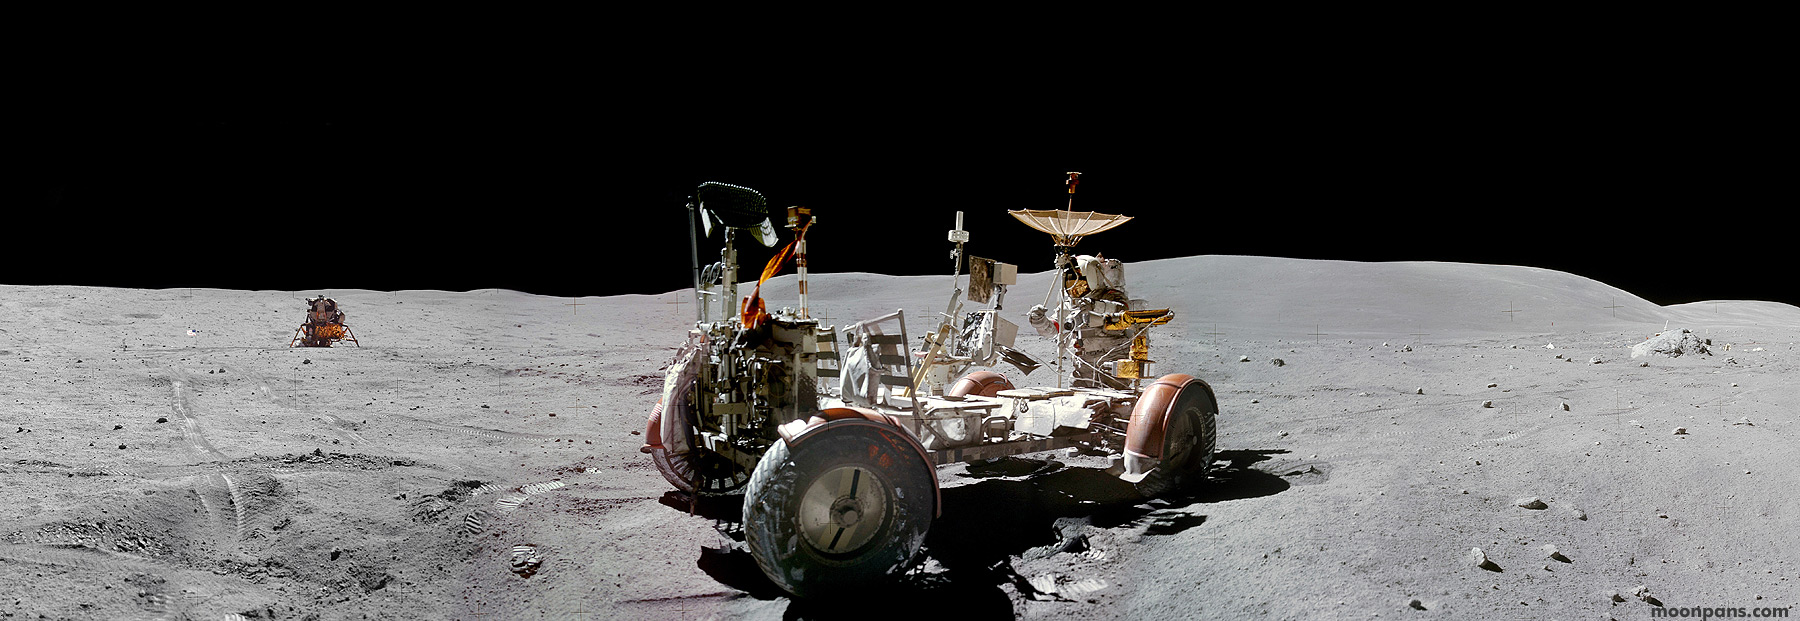 Apollo 16 Moon Panorama